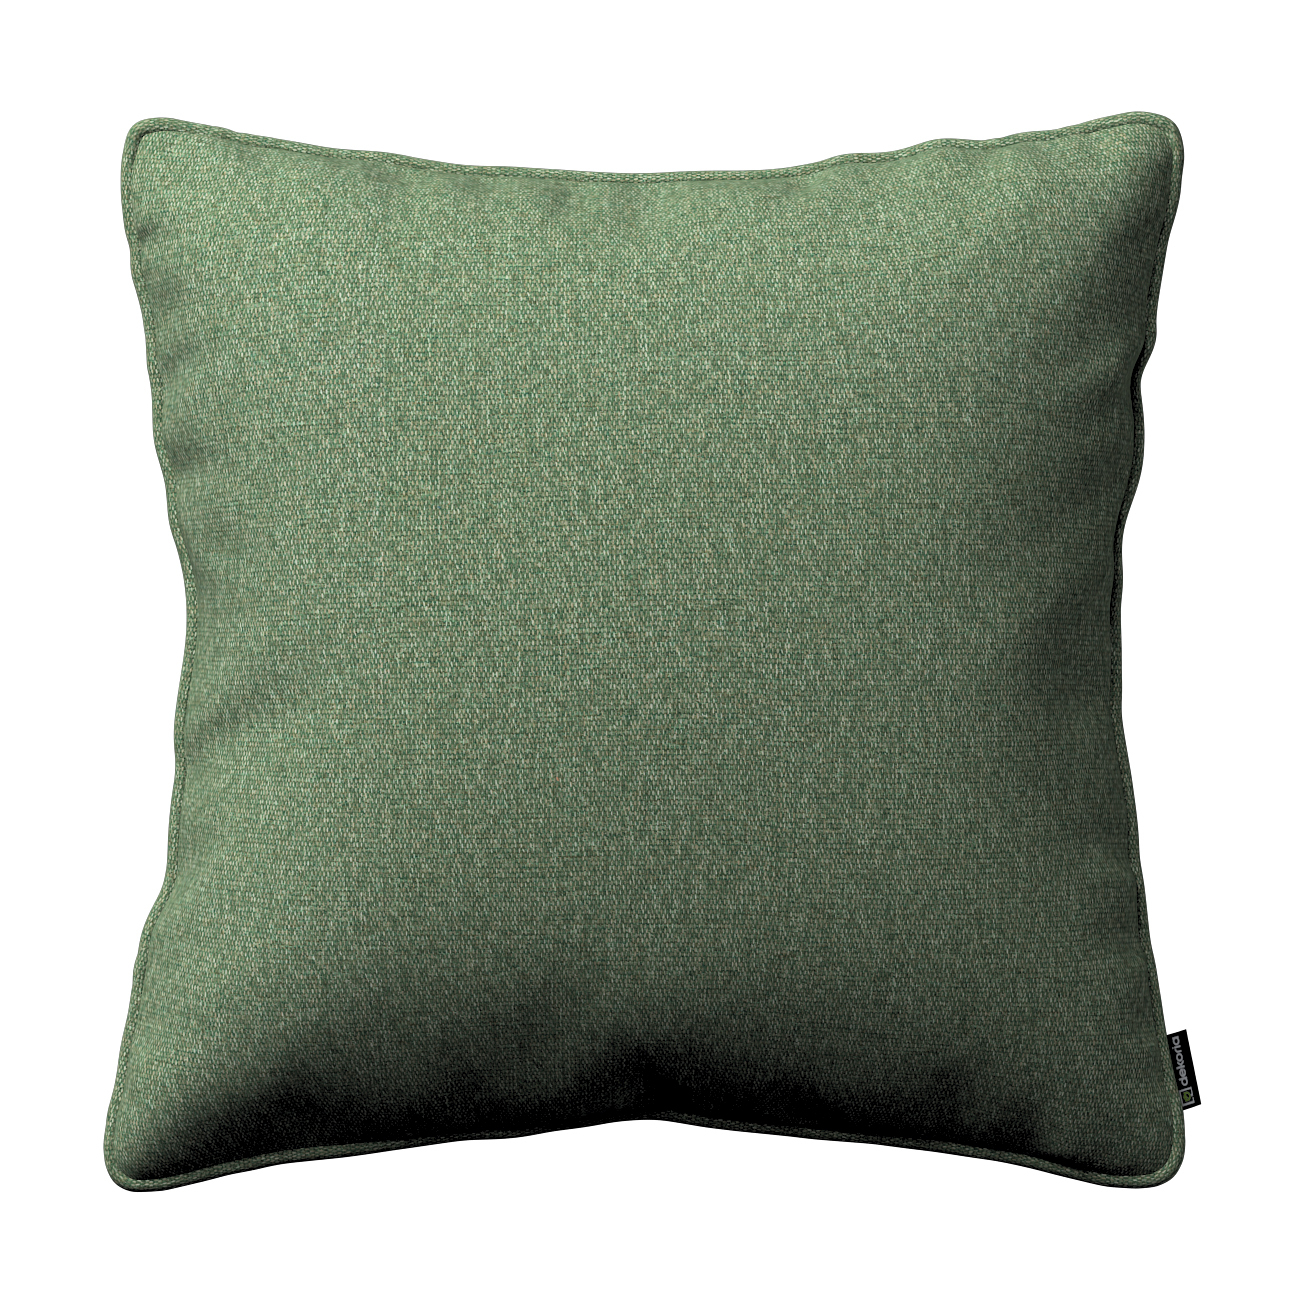 Kissenhülle Gabi mit Paspel, grün, 60 x 60 cm, Amsterdam (704-44) günstig online kaufen